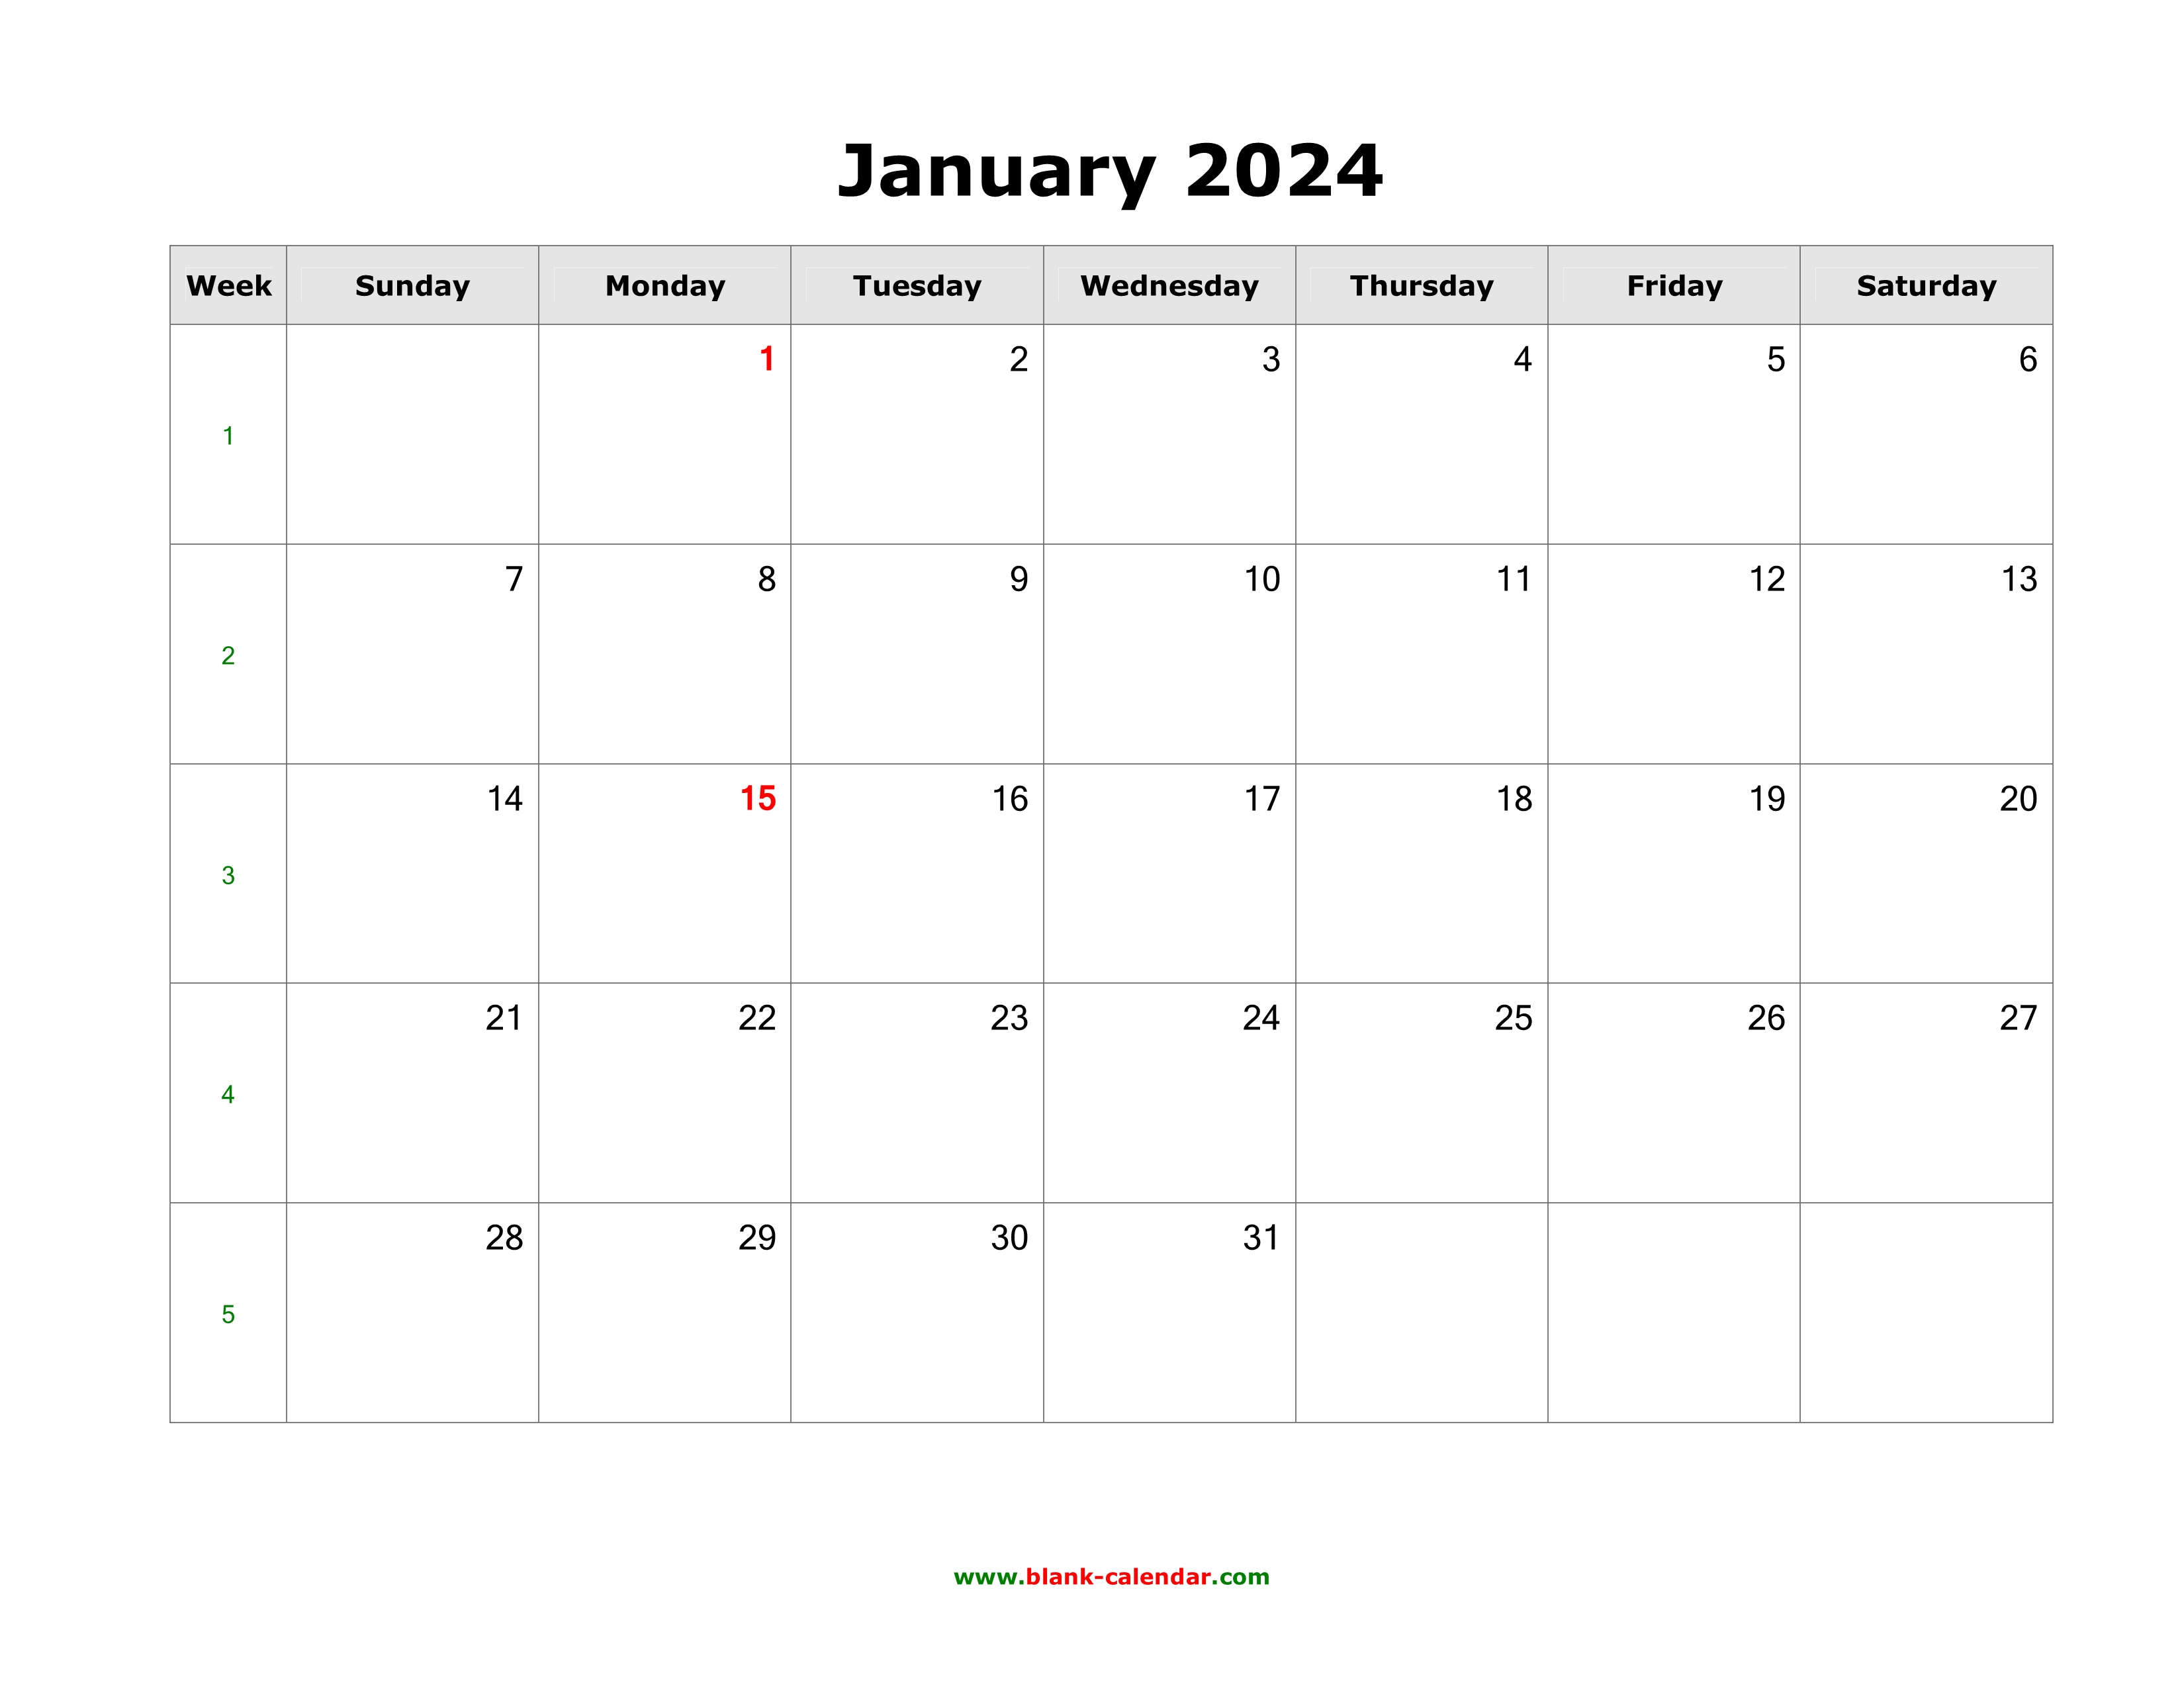 Download January 2024 Blank Calendar (horizontal)